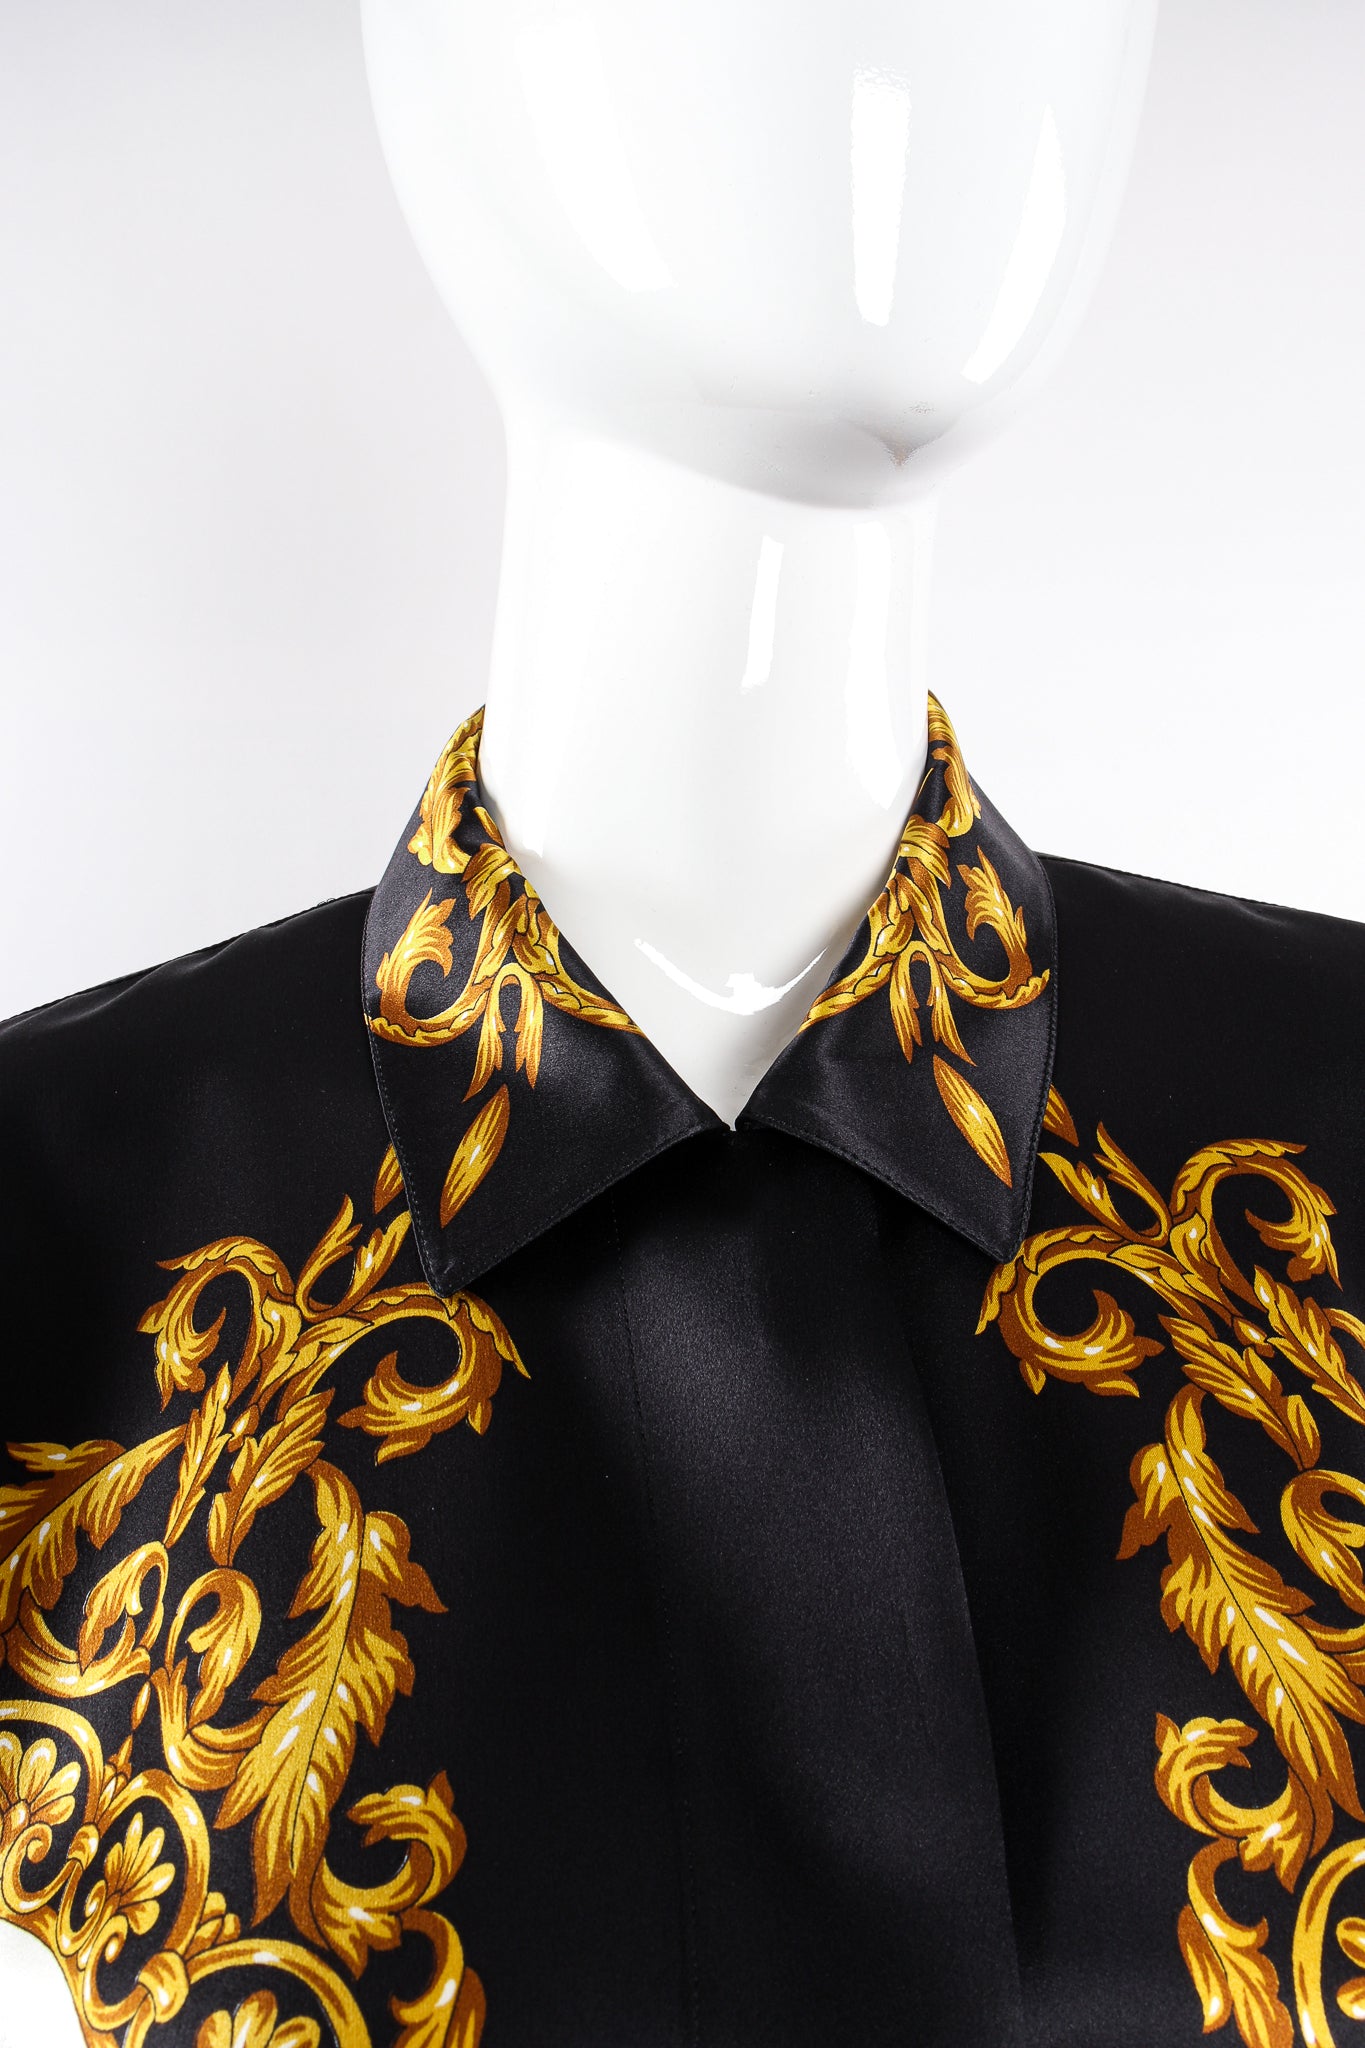 Vintage Escada Baroque Newspaper Print Shirt Galliano Inspired on Mannequin collar at Recess LA